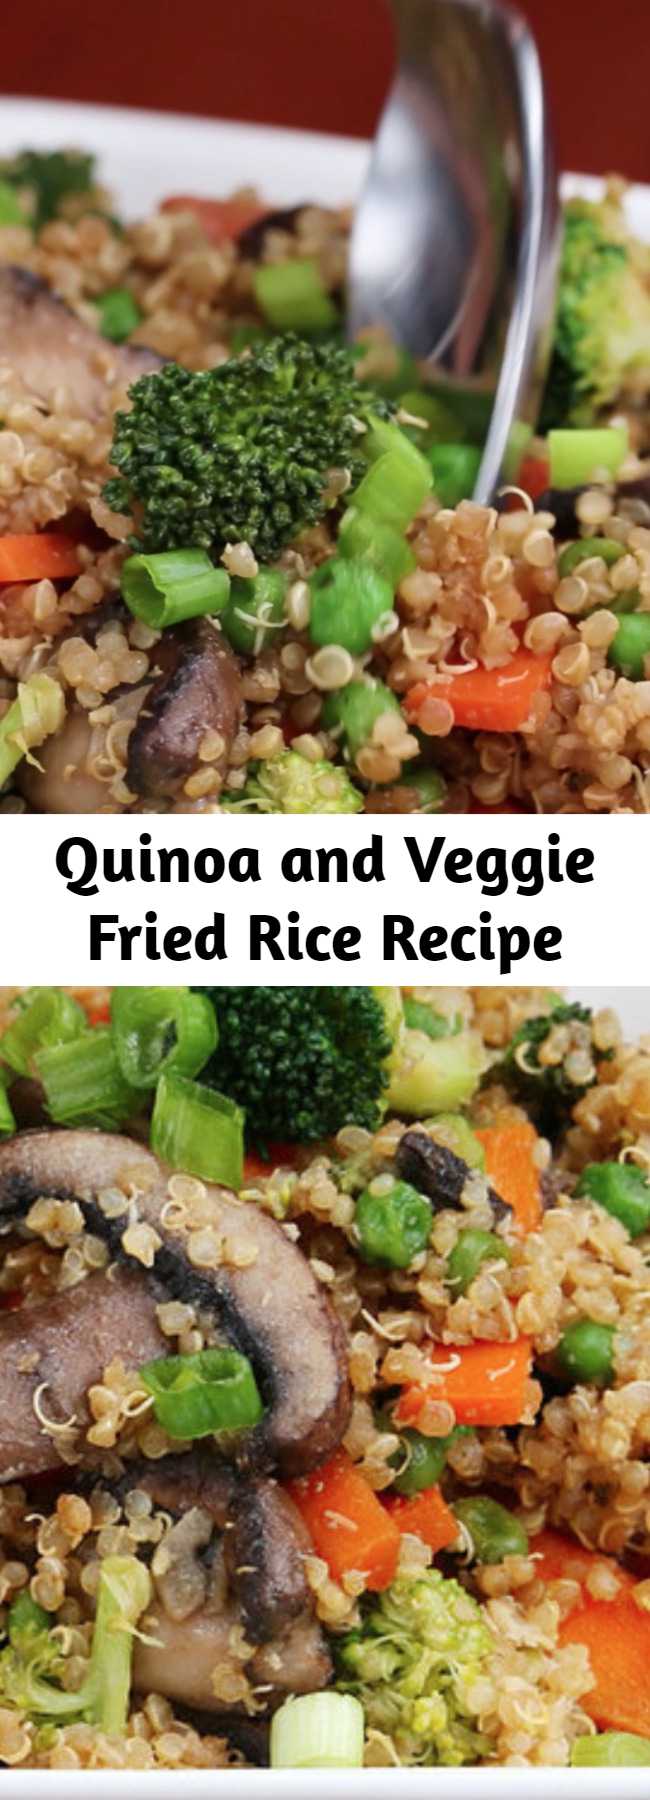 Quinoa and Veggie Fried Rice Recipe